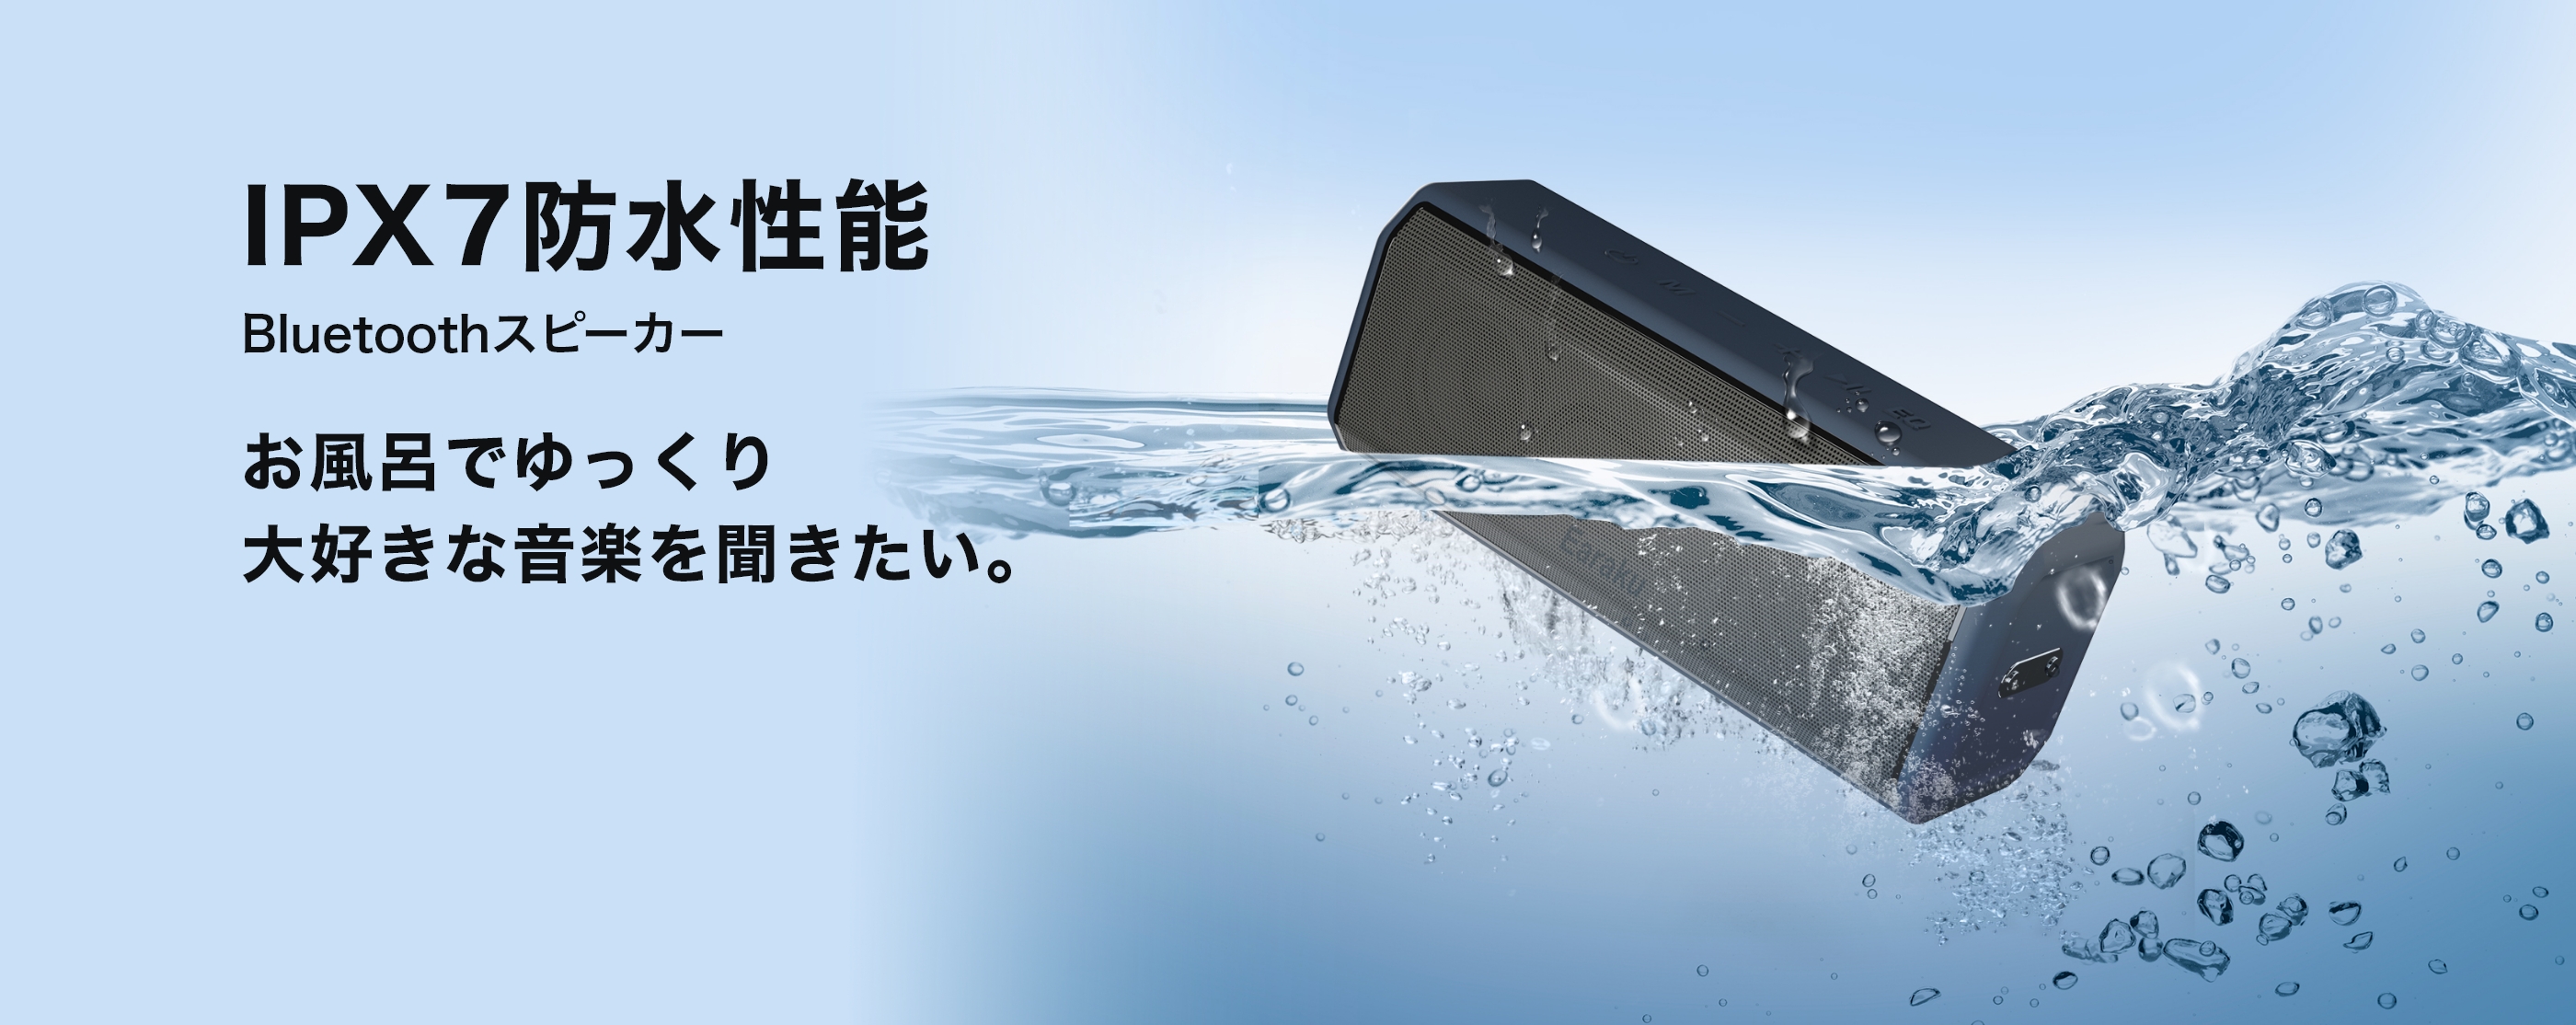 IPX7防水性能。Bluetoothスピーカー。お風呂でゆっくり大好きな音楽を聞きたい。